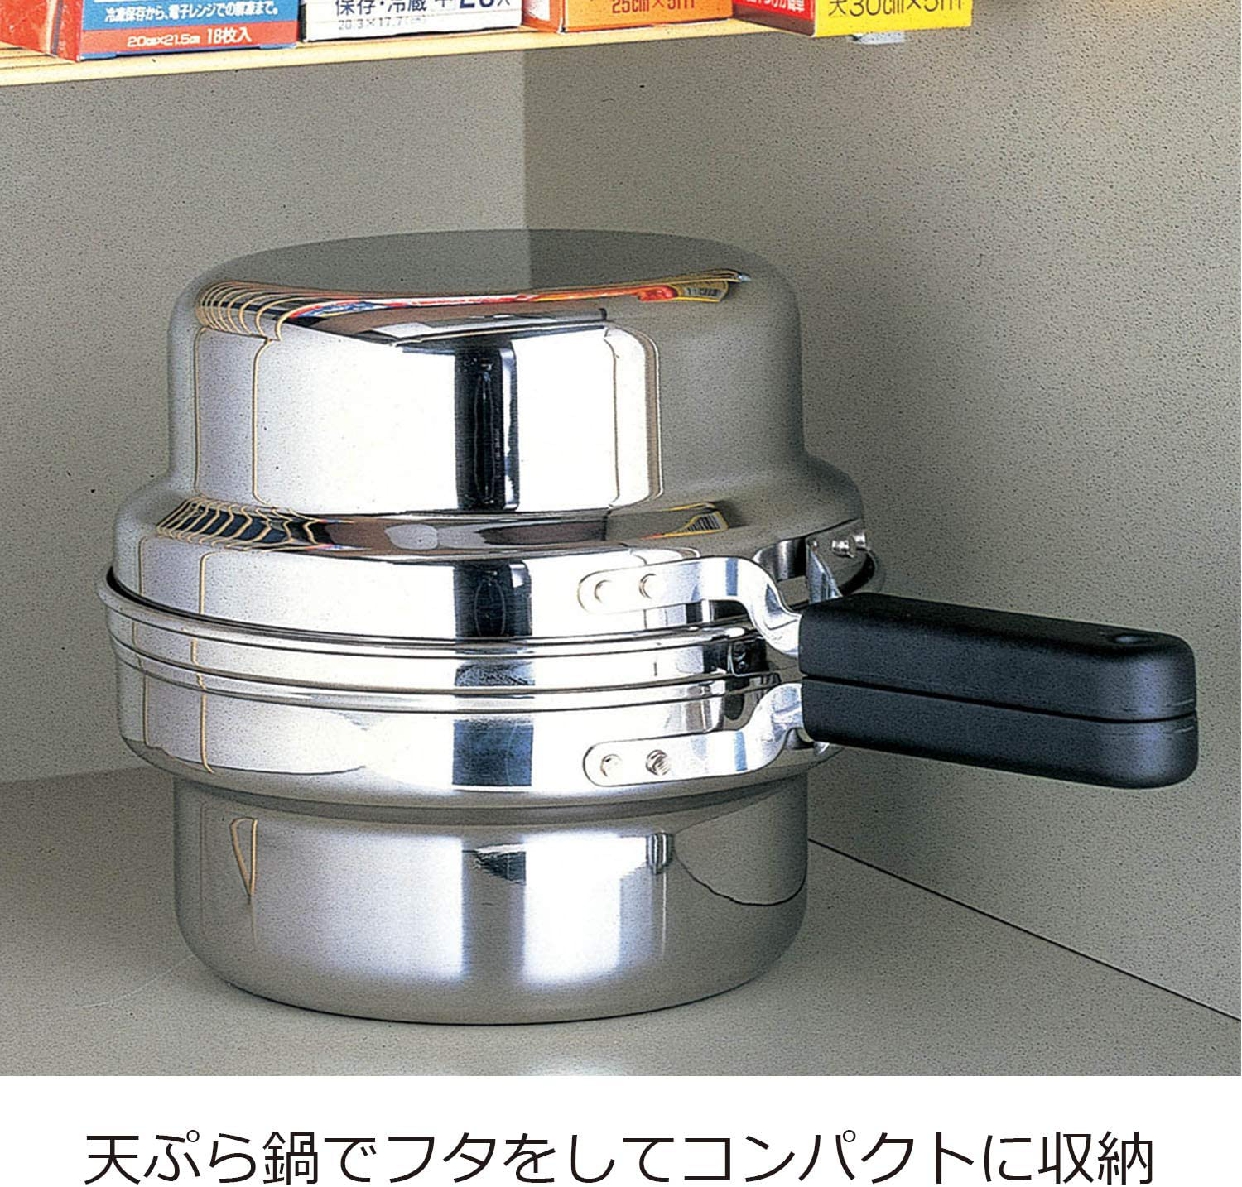 AUX(オークス) 日本製 IH対応 片付け簡単 天ぷら鍋セット オイルポット 温度計付 シルバー T23の商品画像4 